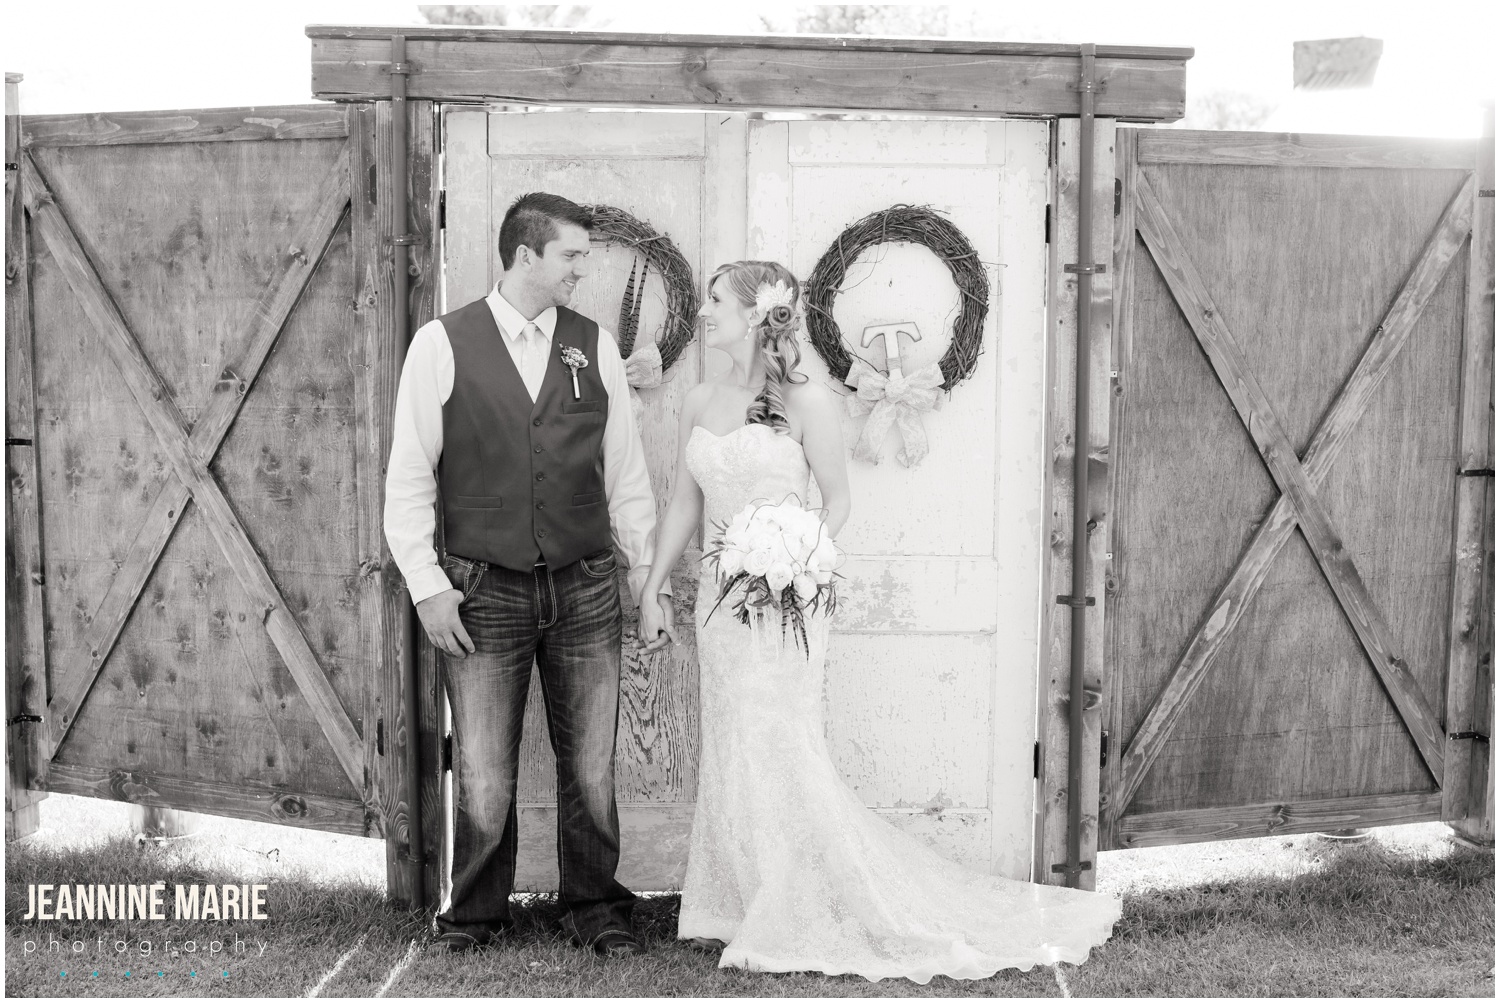 Hope Glen Farm, Twin Cities wedding venues, Minnesota farm weddings, Jeannine Marie Photography, Minneapolis wedding photographer_1796